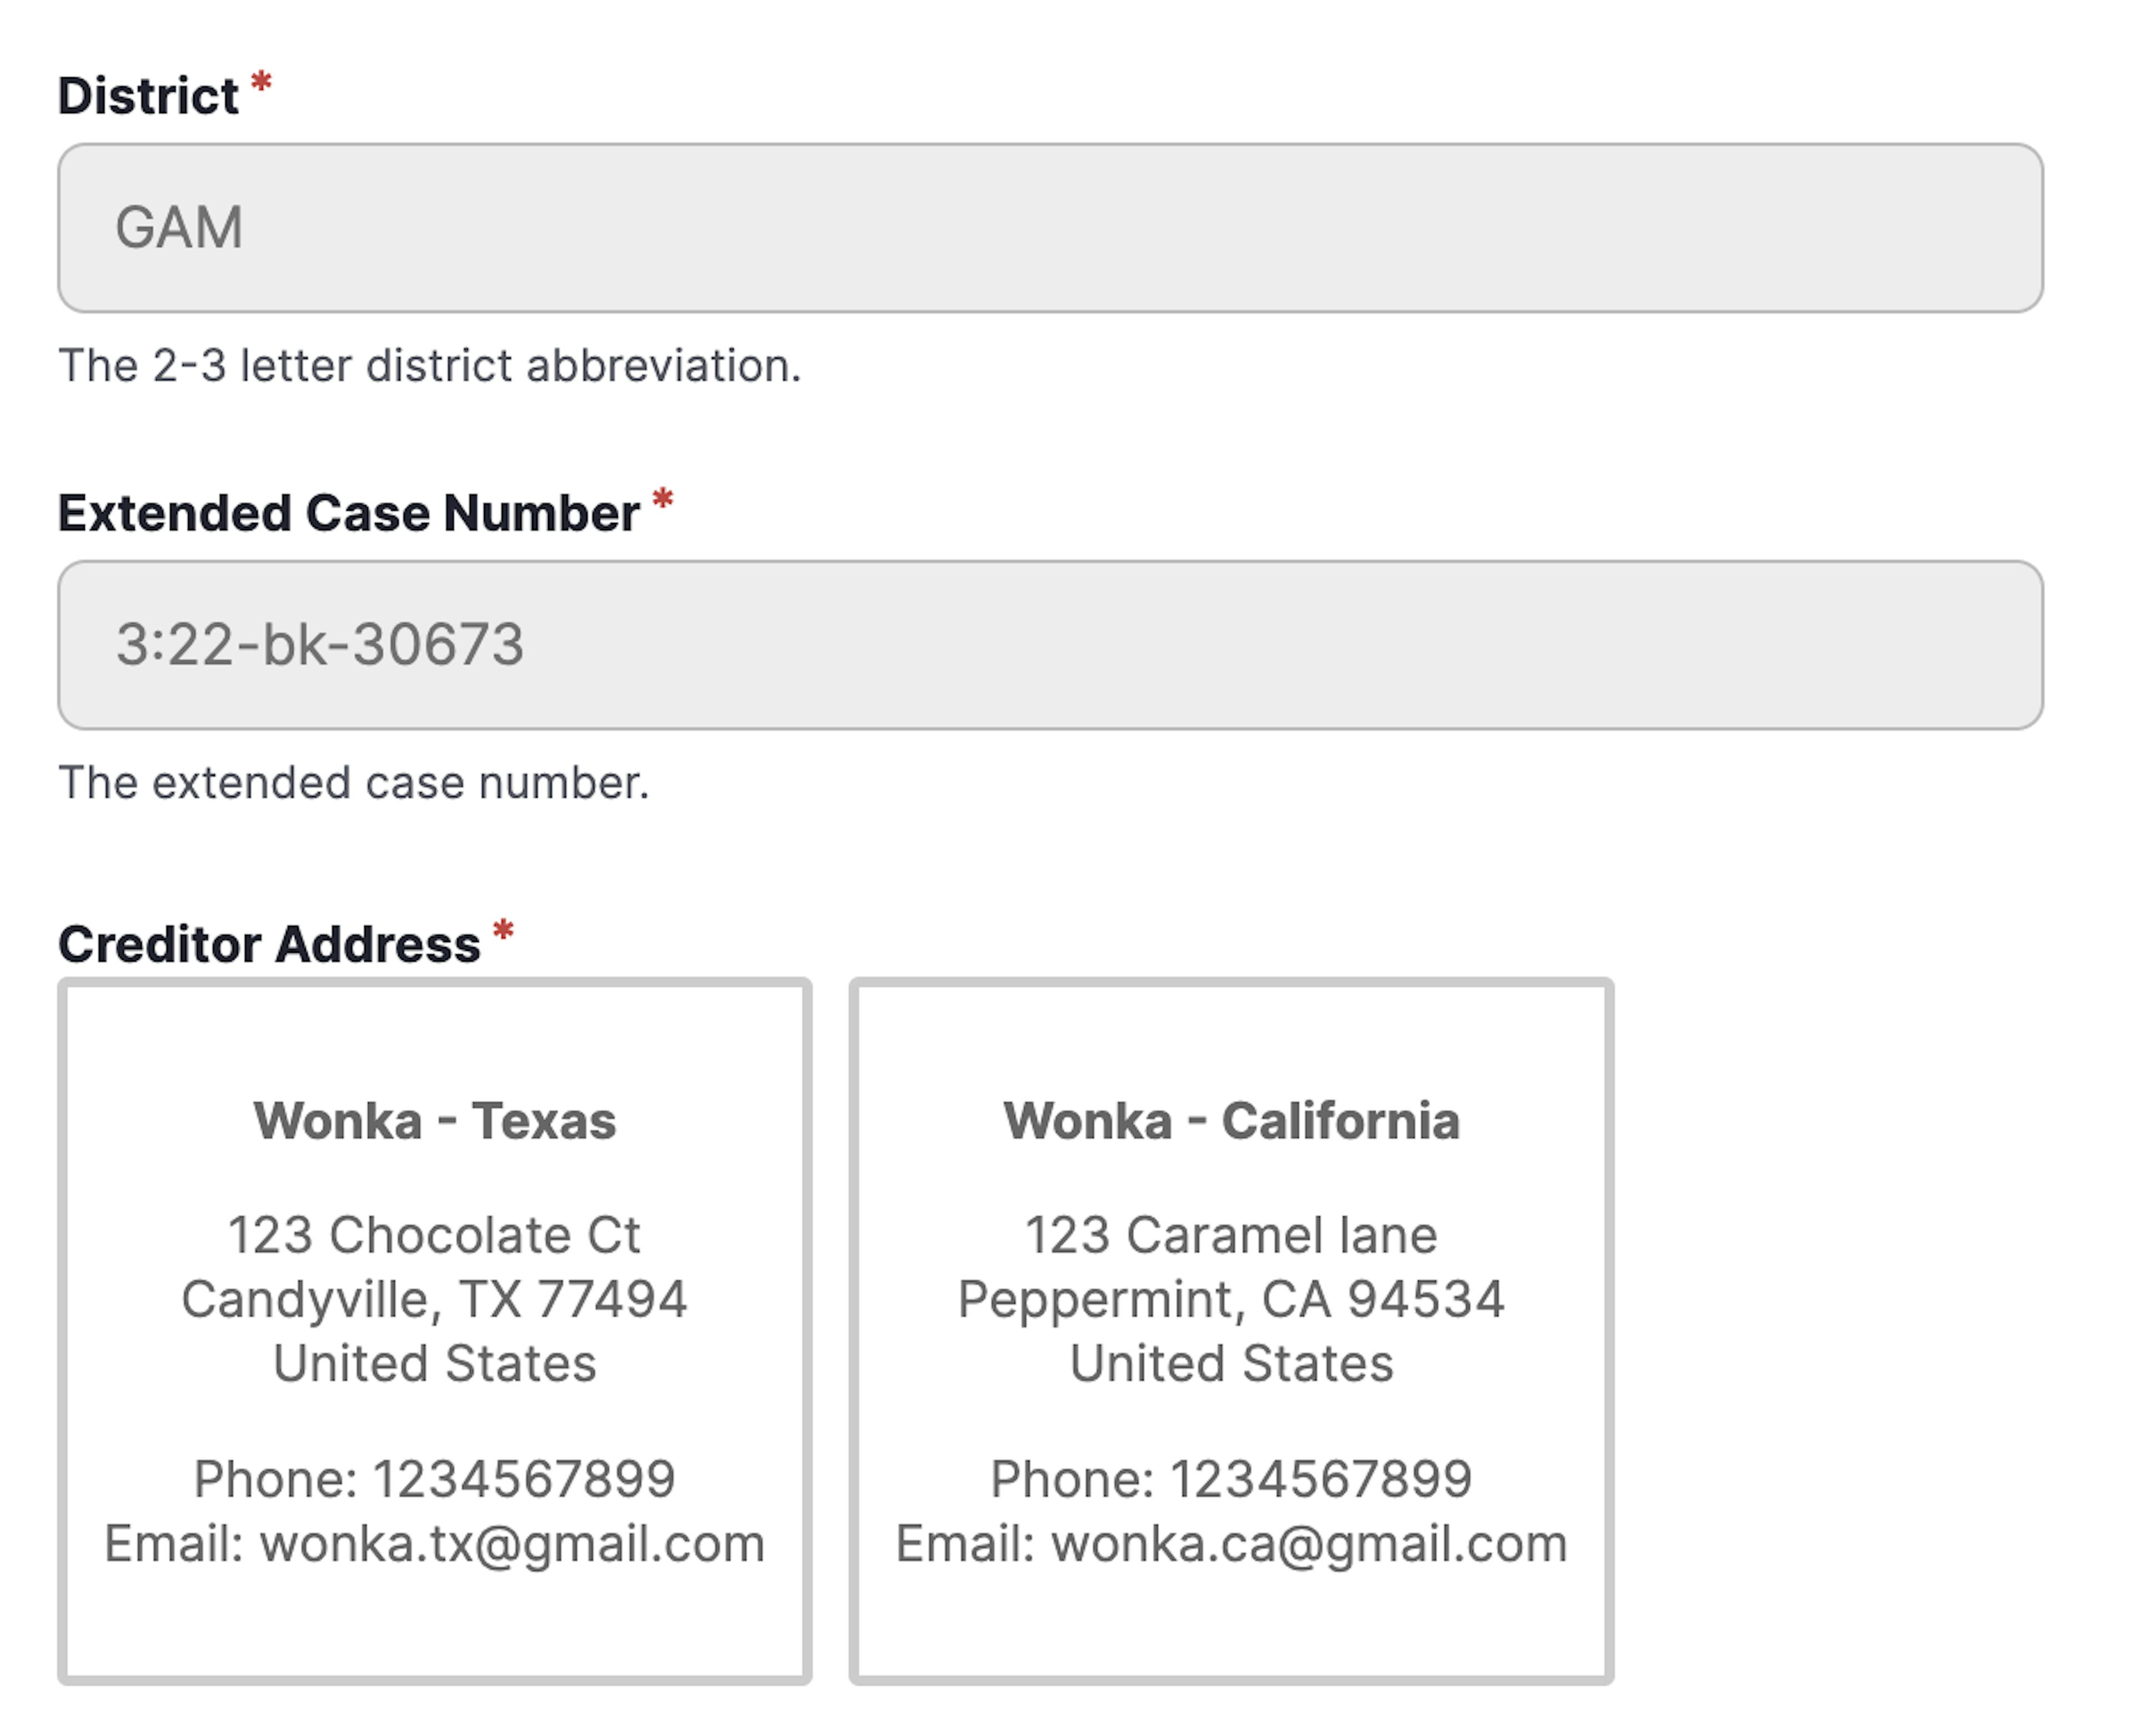 Claims filing address input